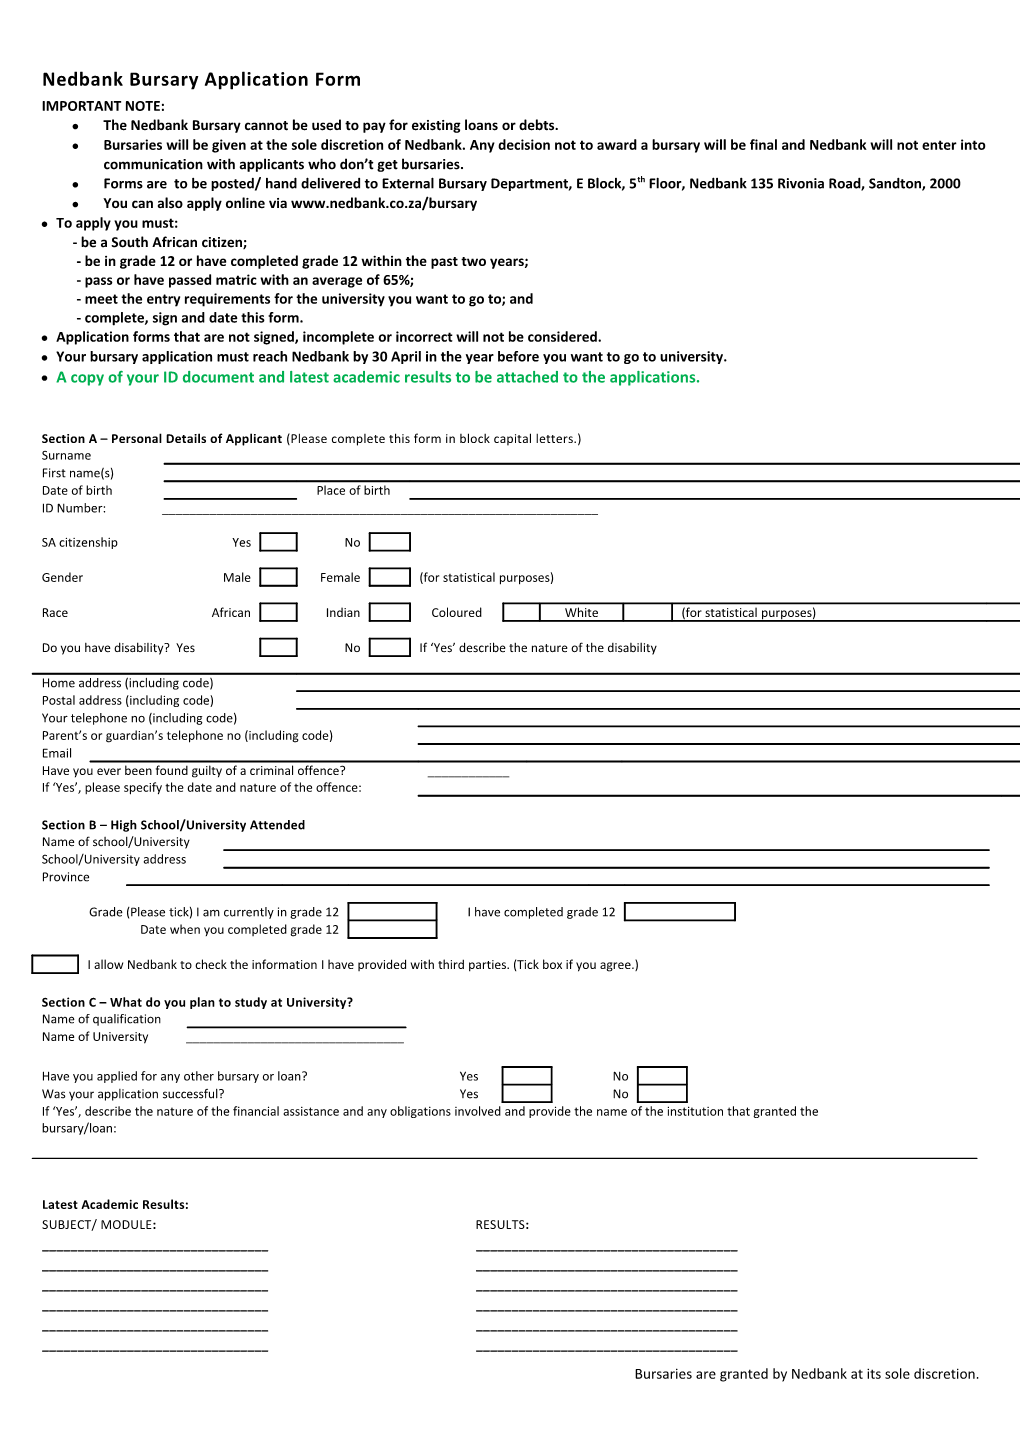 Nedbank Bursary Application Form